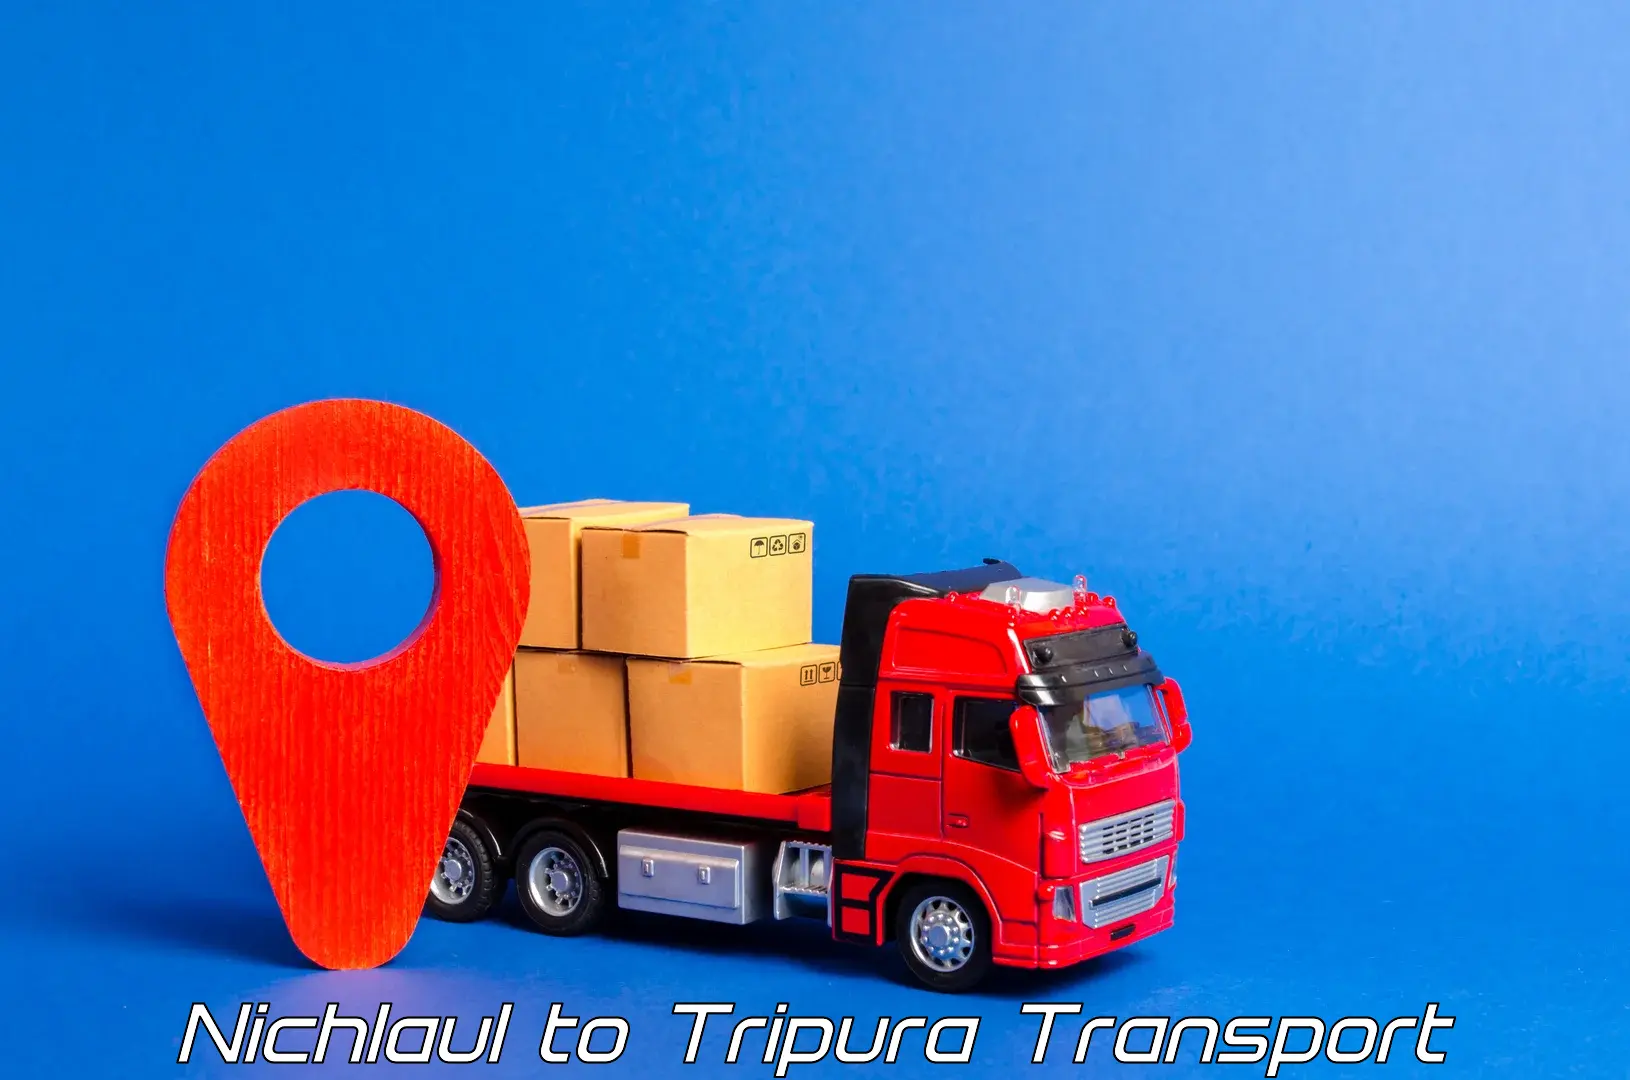 Sending bike to another city Nichlaul to Tripura